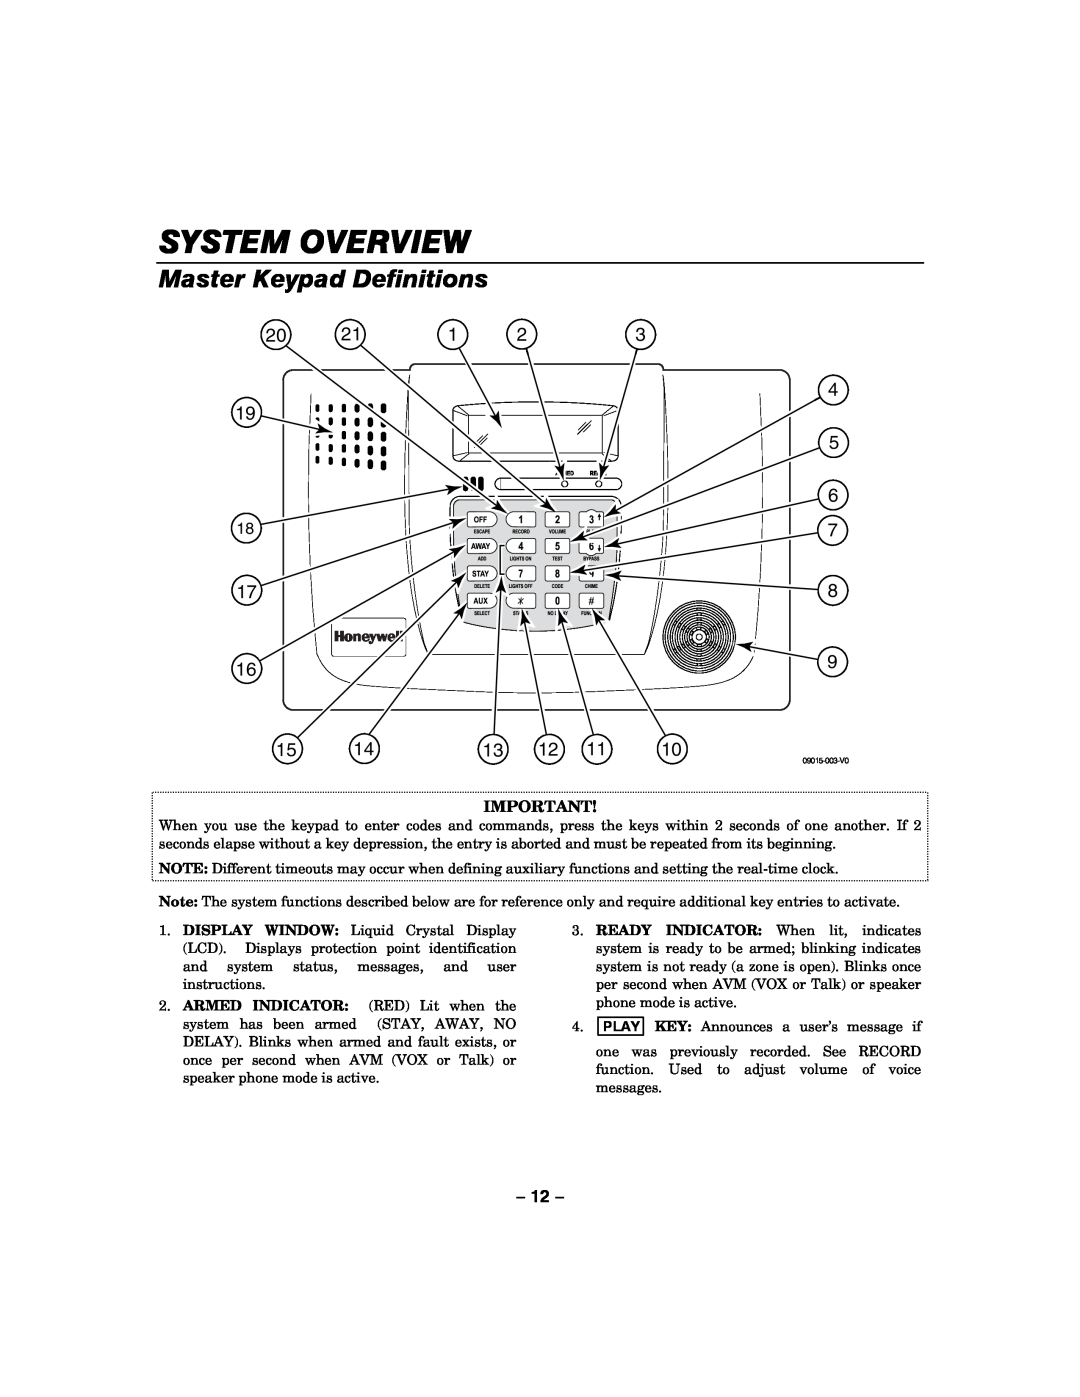 Honeywell LYNXR-2 manual Master Keypad Definitions, System Overview 